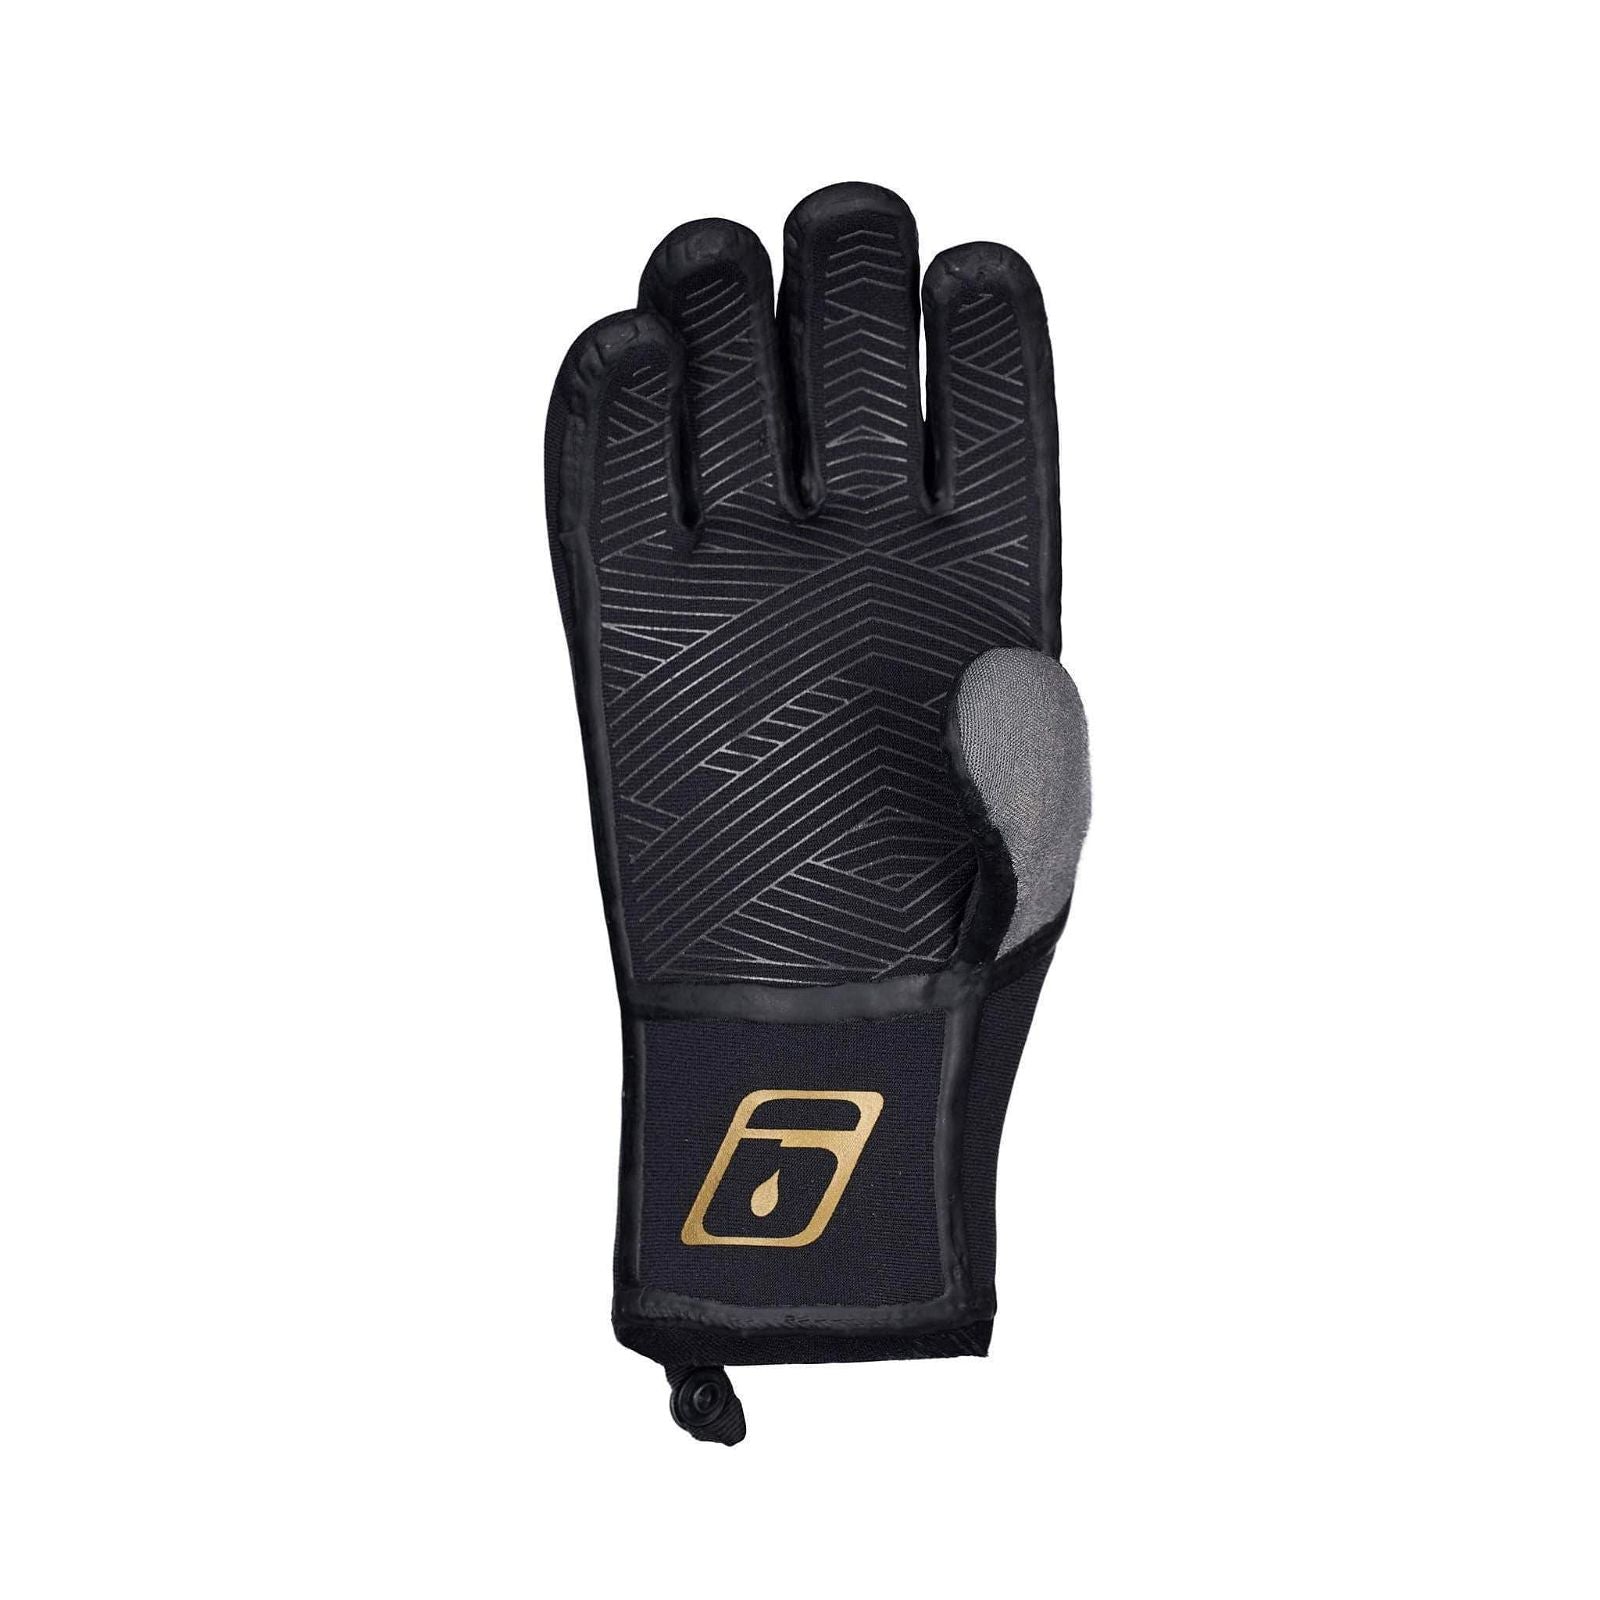   Granite Glove  BestCoast Outfitters 